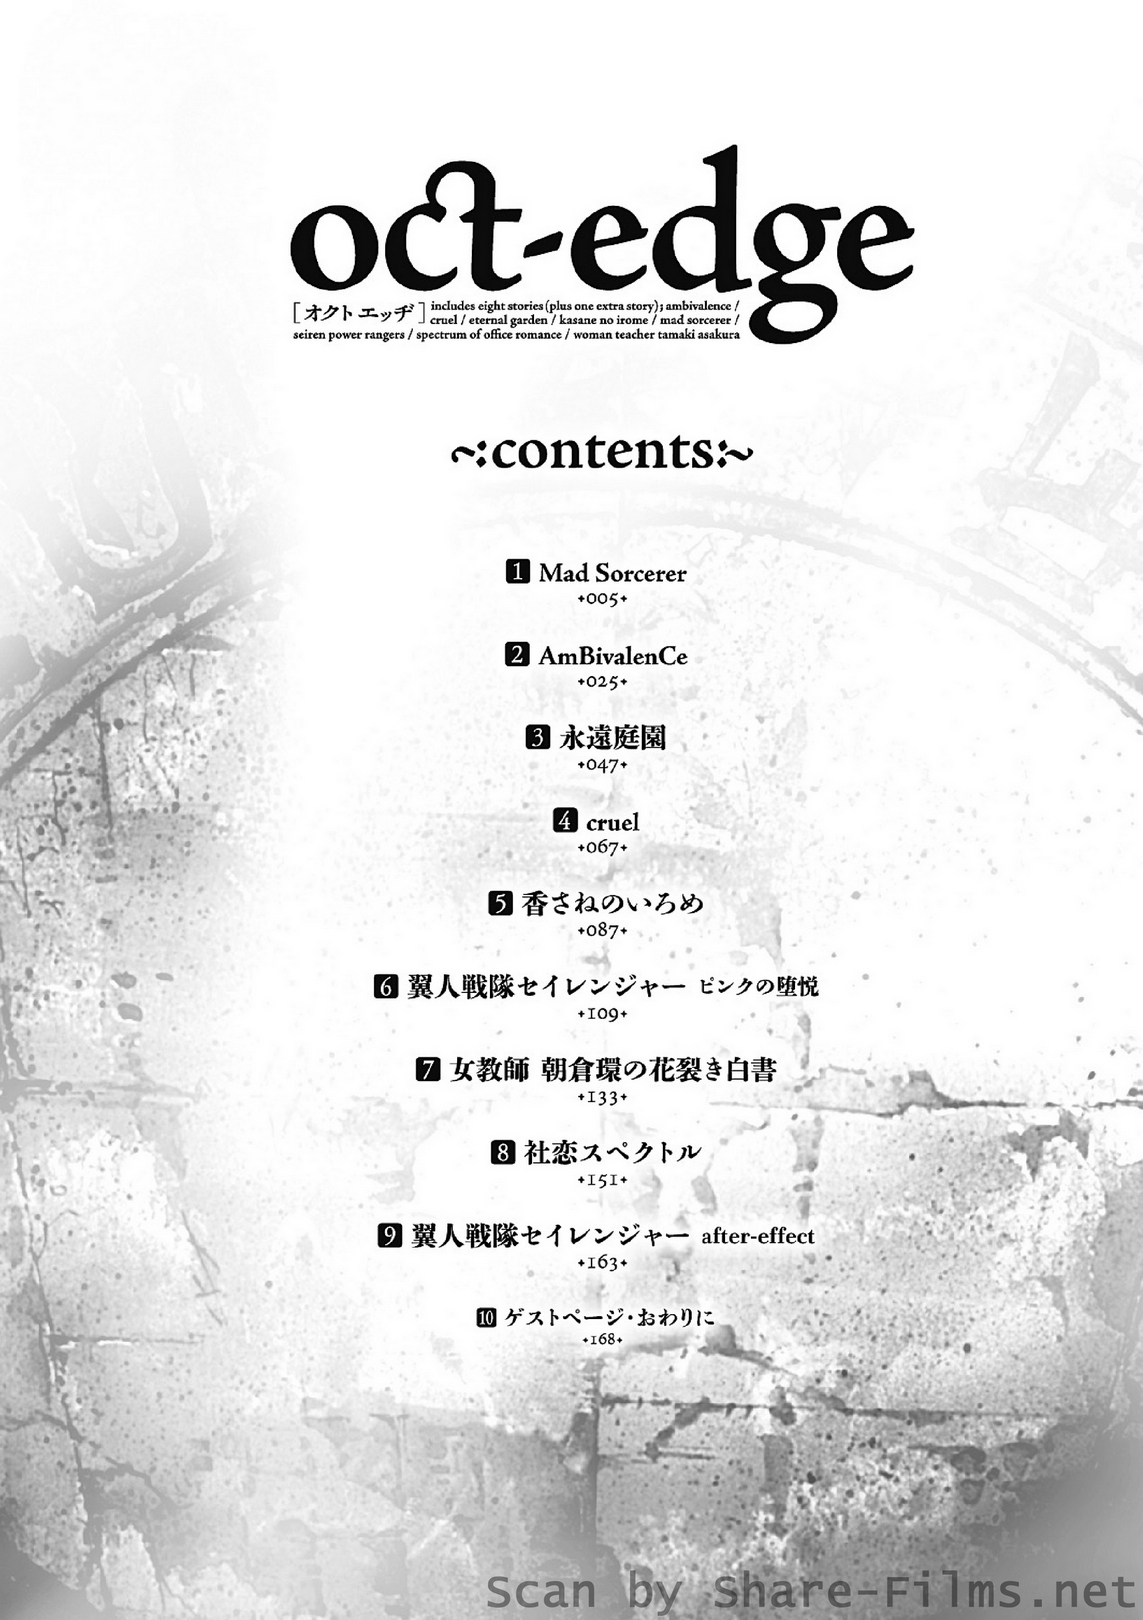 [Karasuma Nishiki] oct-edge [からすま弐式] oct-edge [2011-02-10]